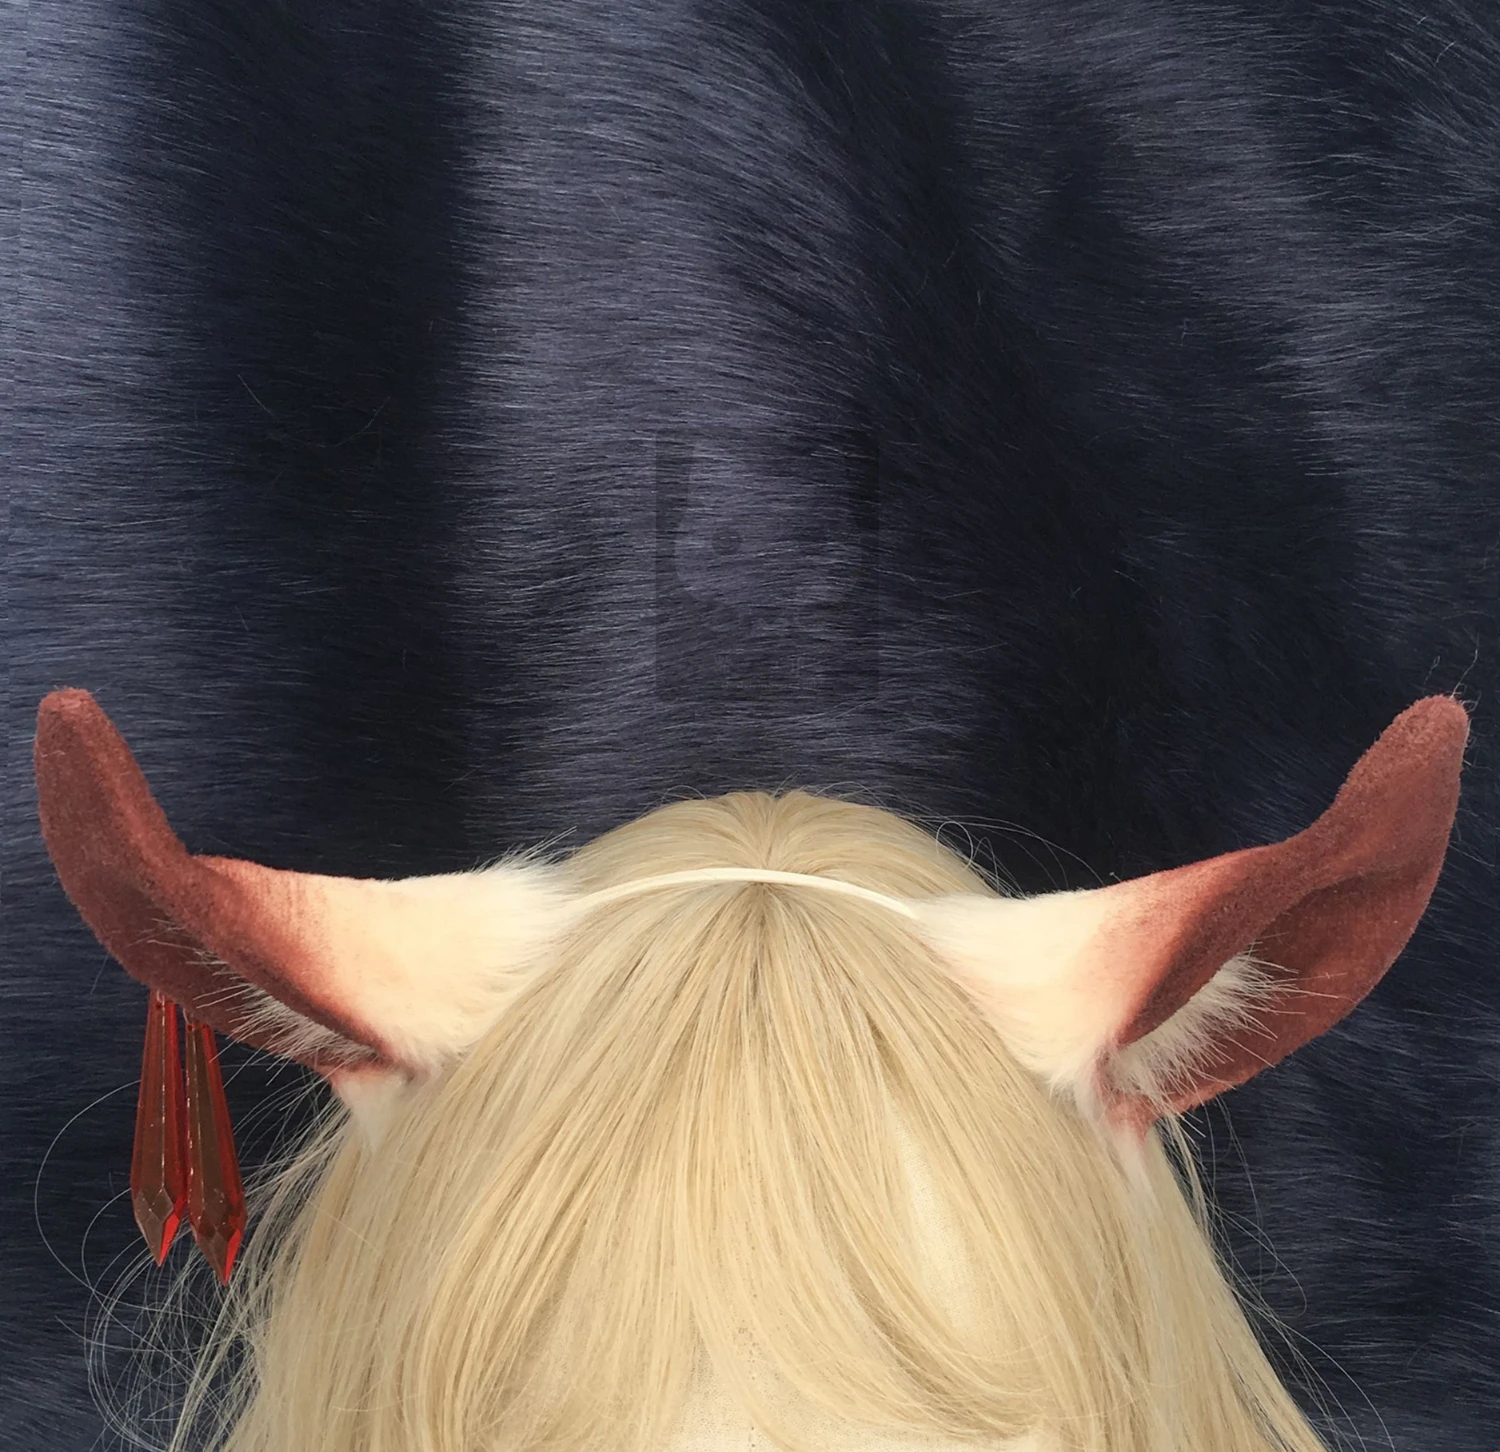 

MMGG New Arknights Gitano red cat neko wolf fox Ears Pendant hairhoop for anime lolita cosplay costume accessories